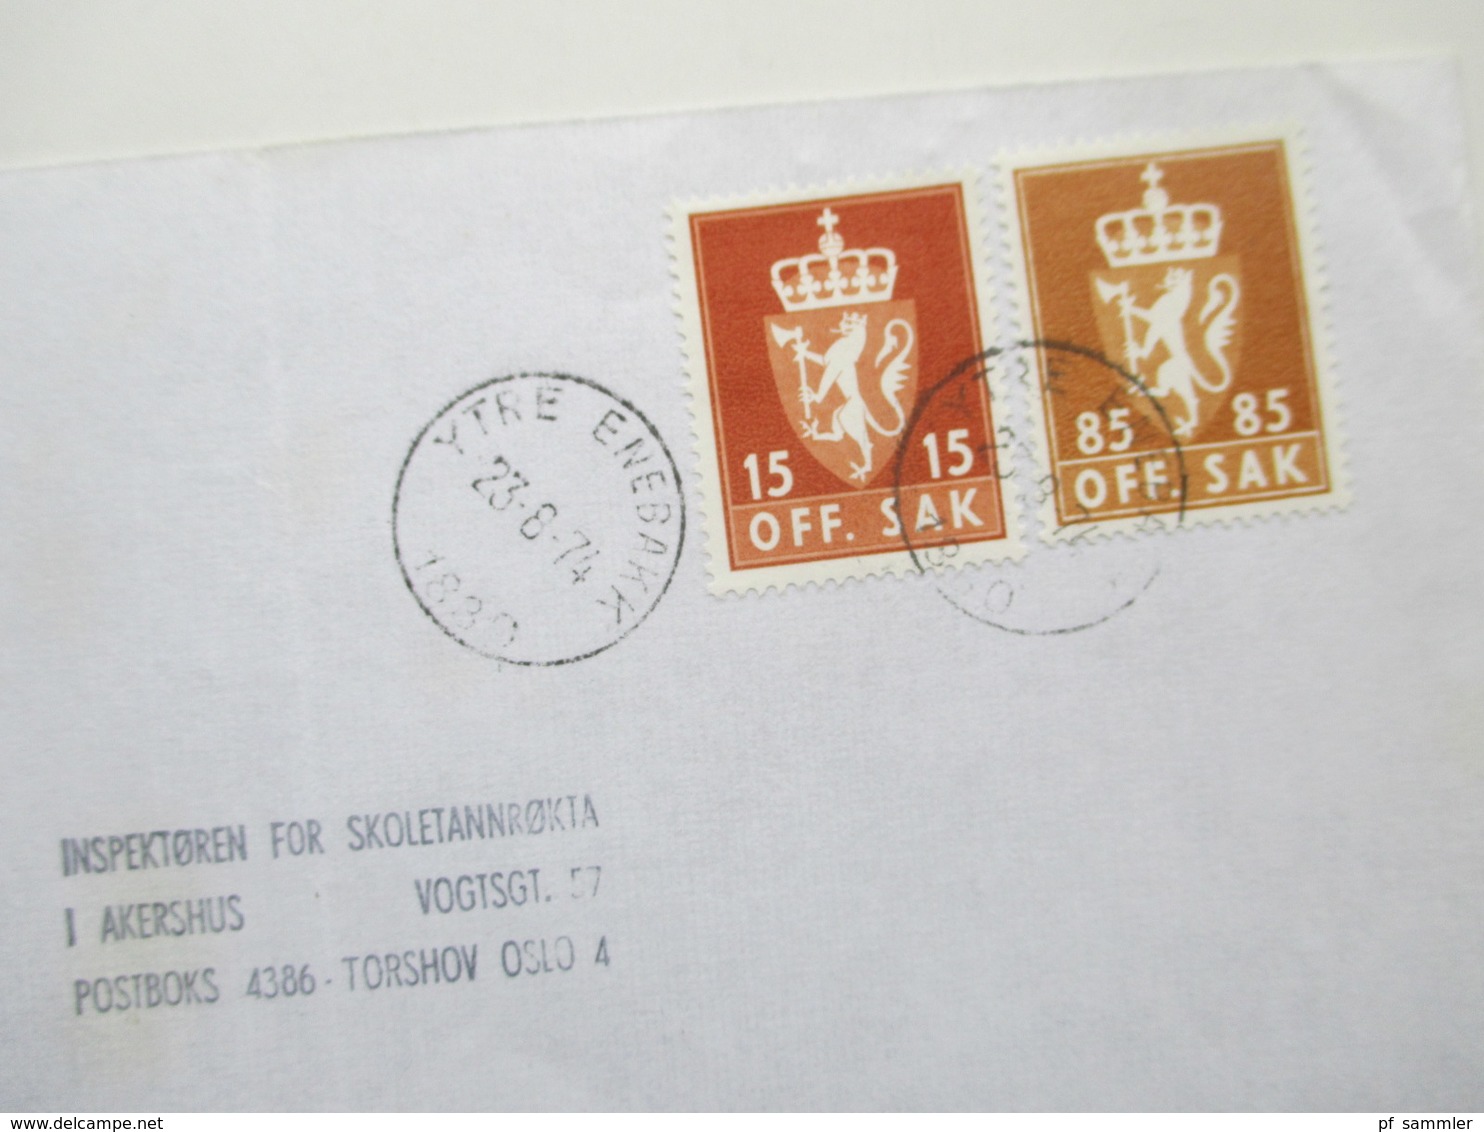 Norwegen 1972 Dienstmarken 5 Belege Inspektoren For Skoletannrokta Akershus. Off. Sak - Officials